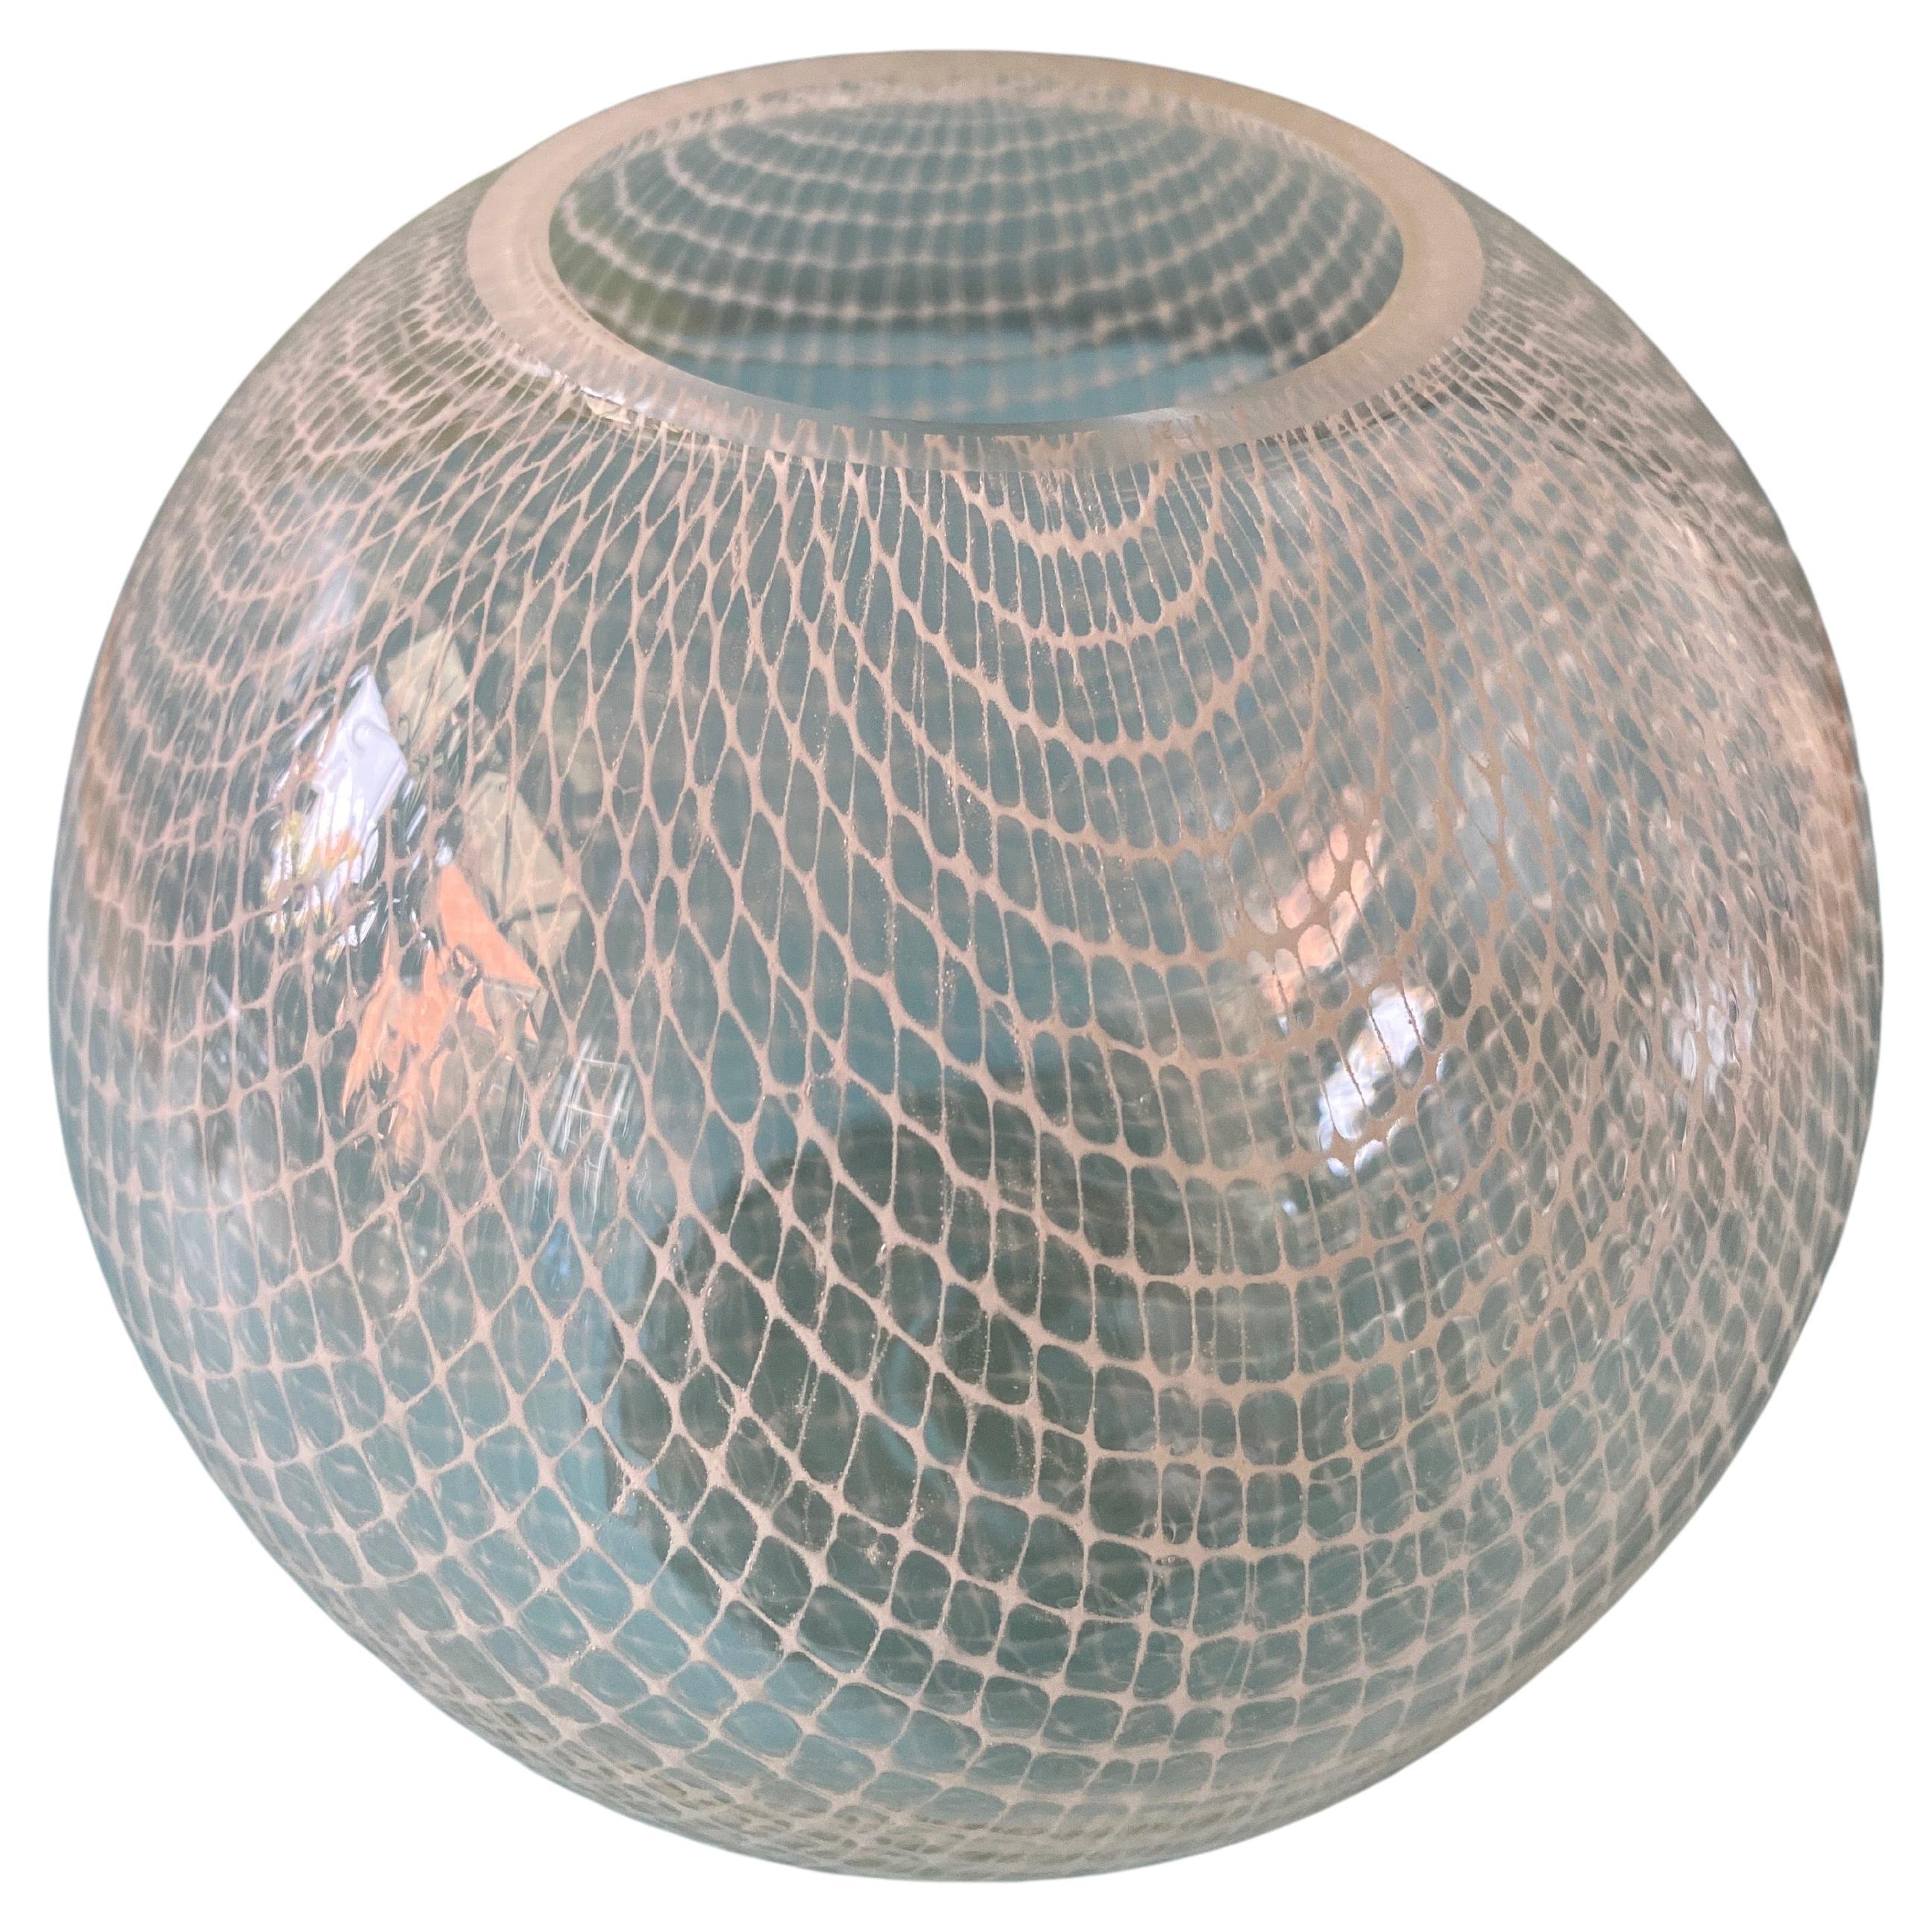 Merletto Glass Vase with Ground Lip, style of Harrachov Czech